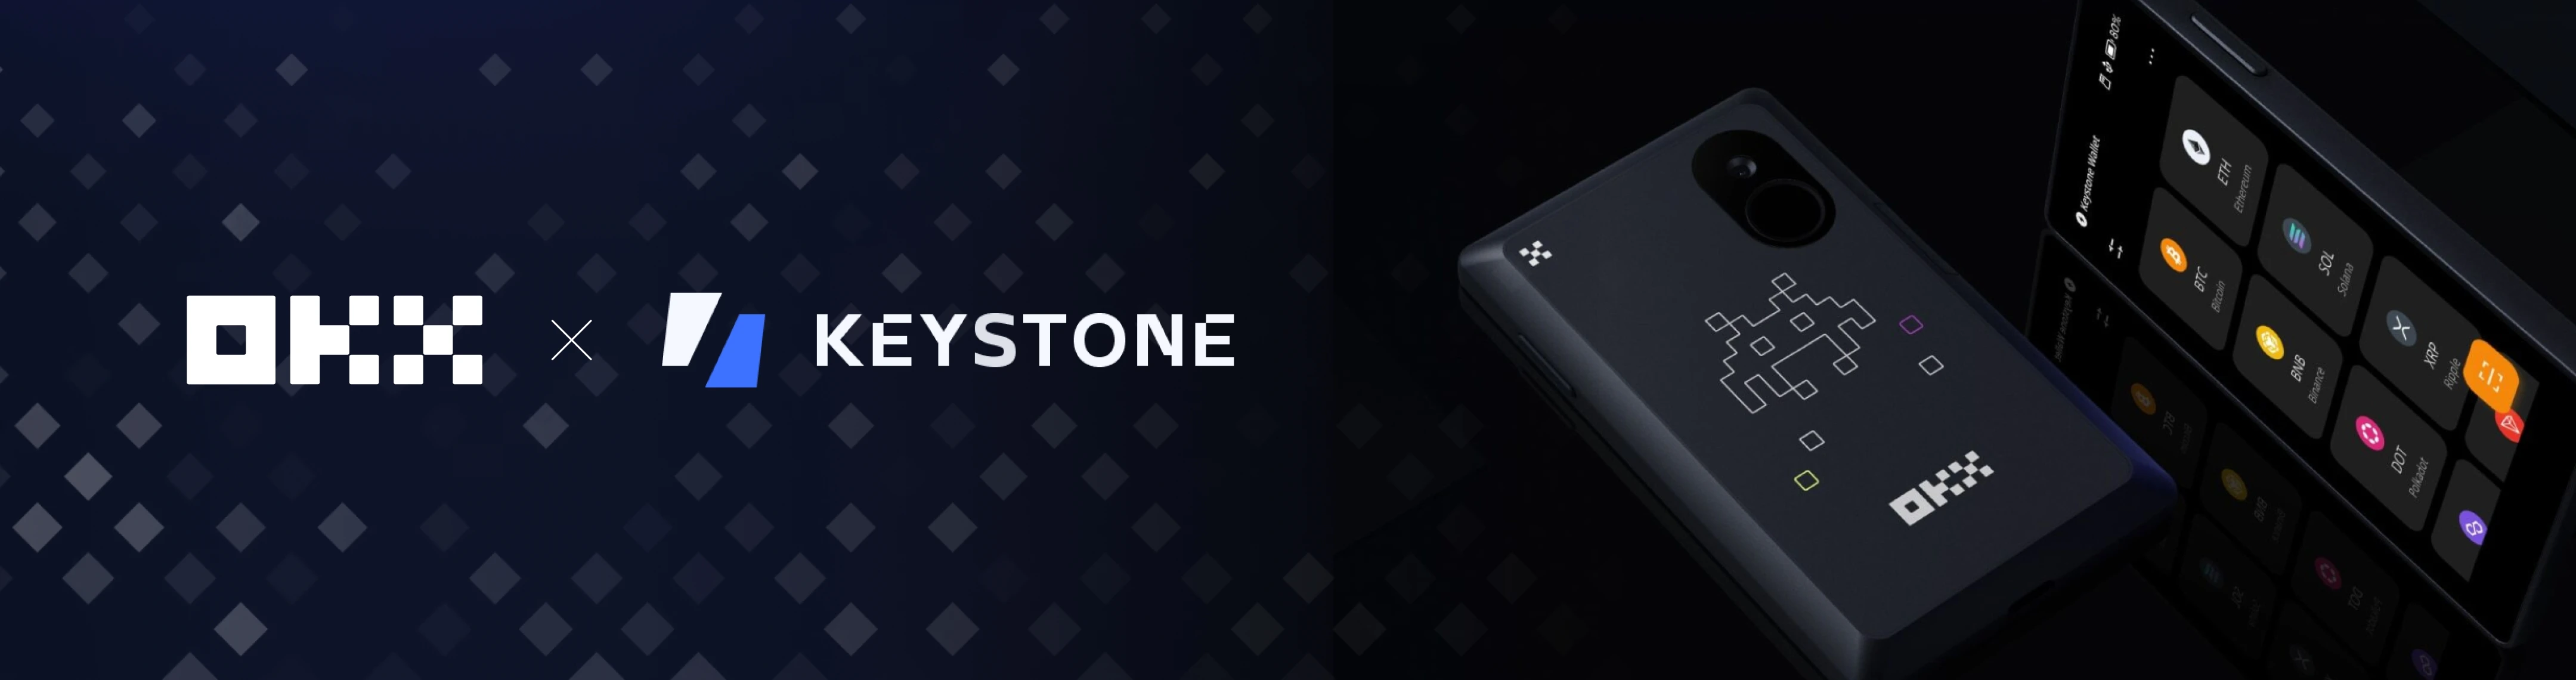 Kupon diskon terbatas OKX × Keystone3 Pro. Ayo berlangganan sekarang!